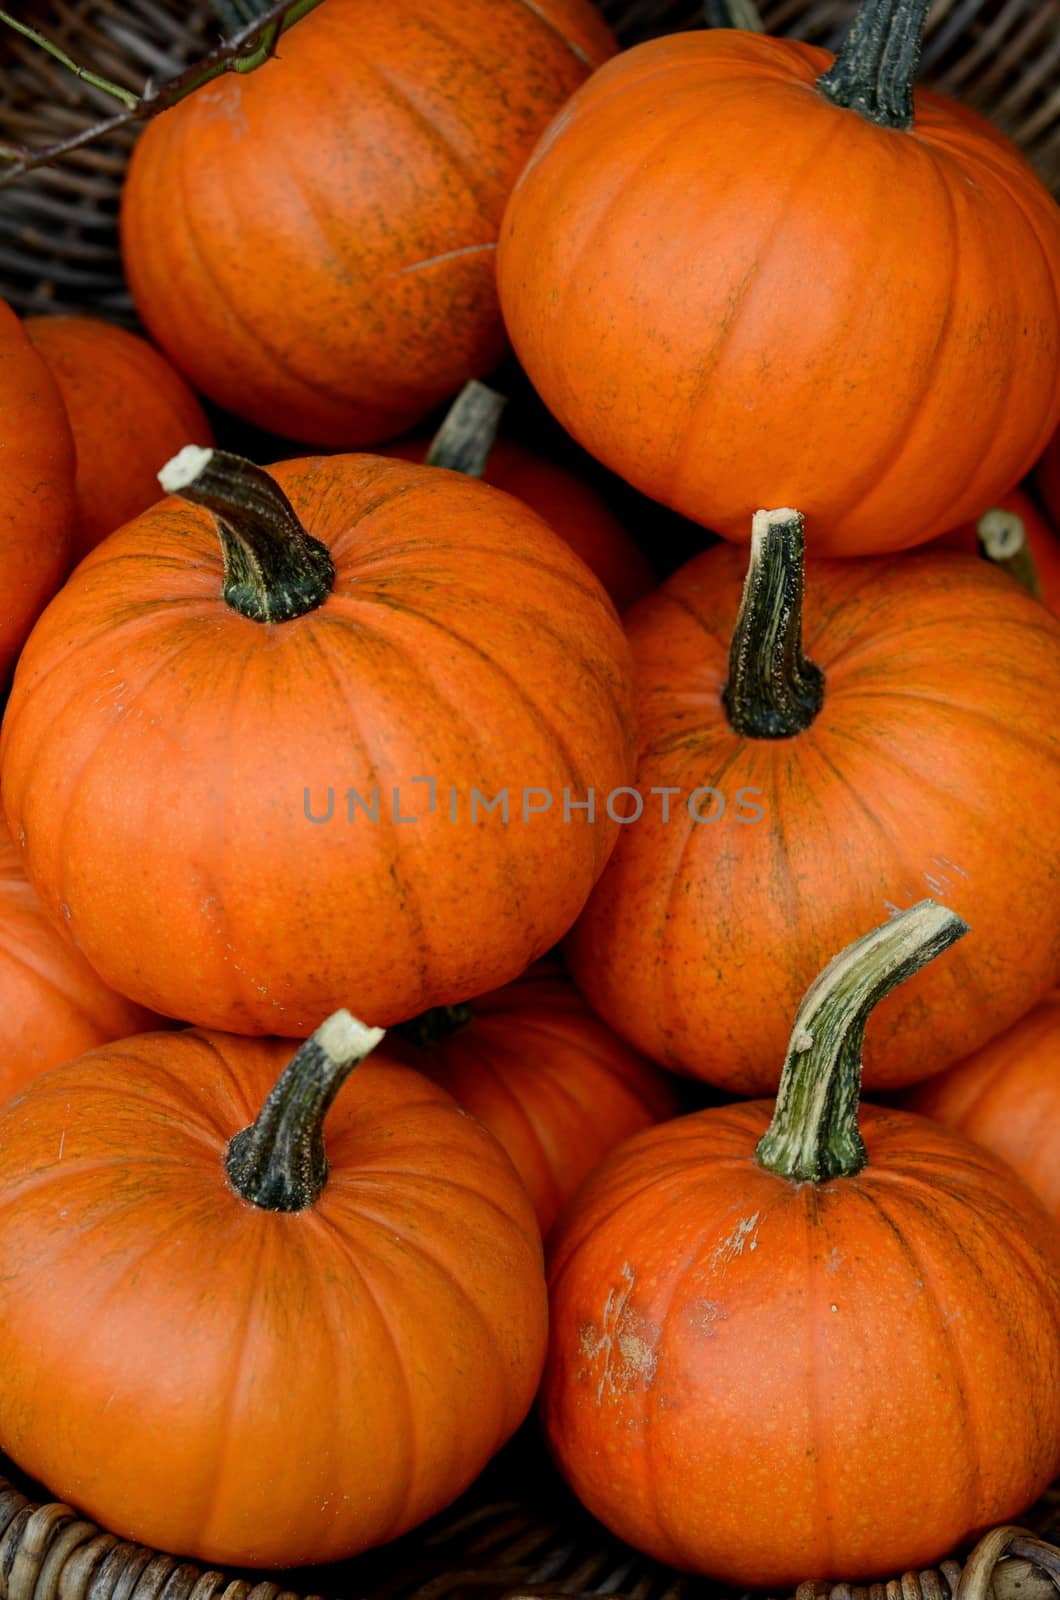 A Halloween Background Image Of Pumpkins At A Market